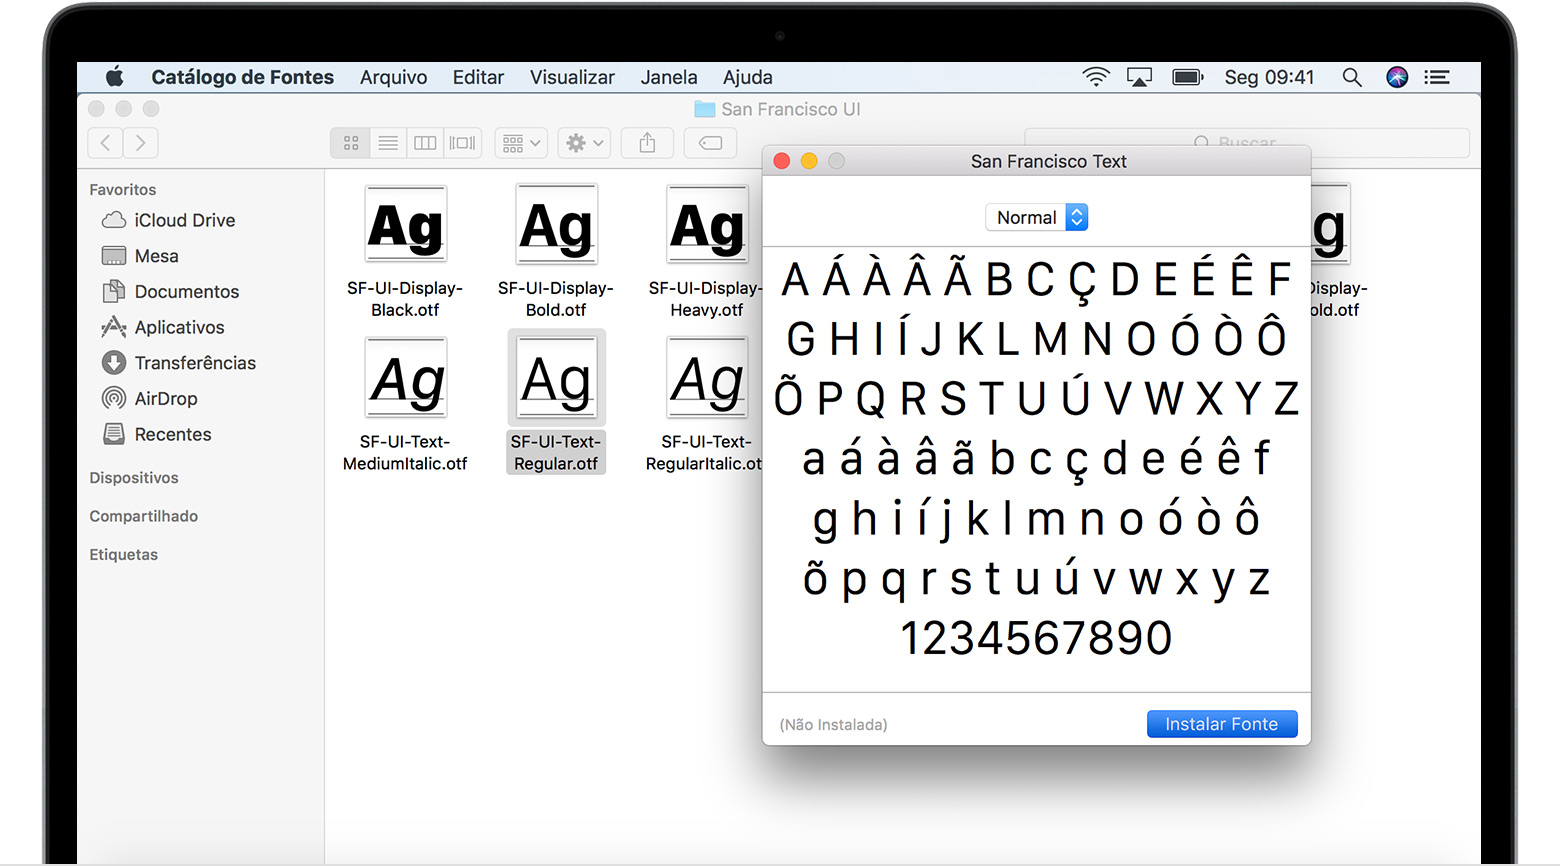 Apple Font Book Mac Download